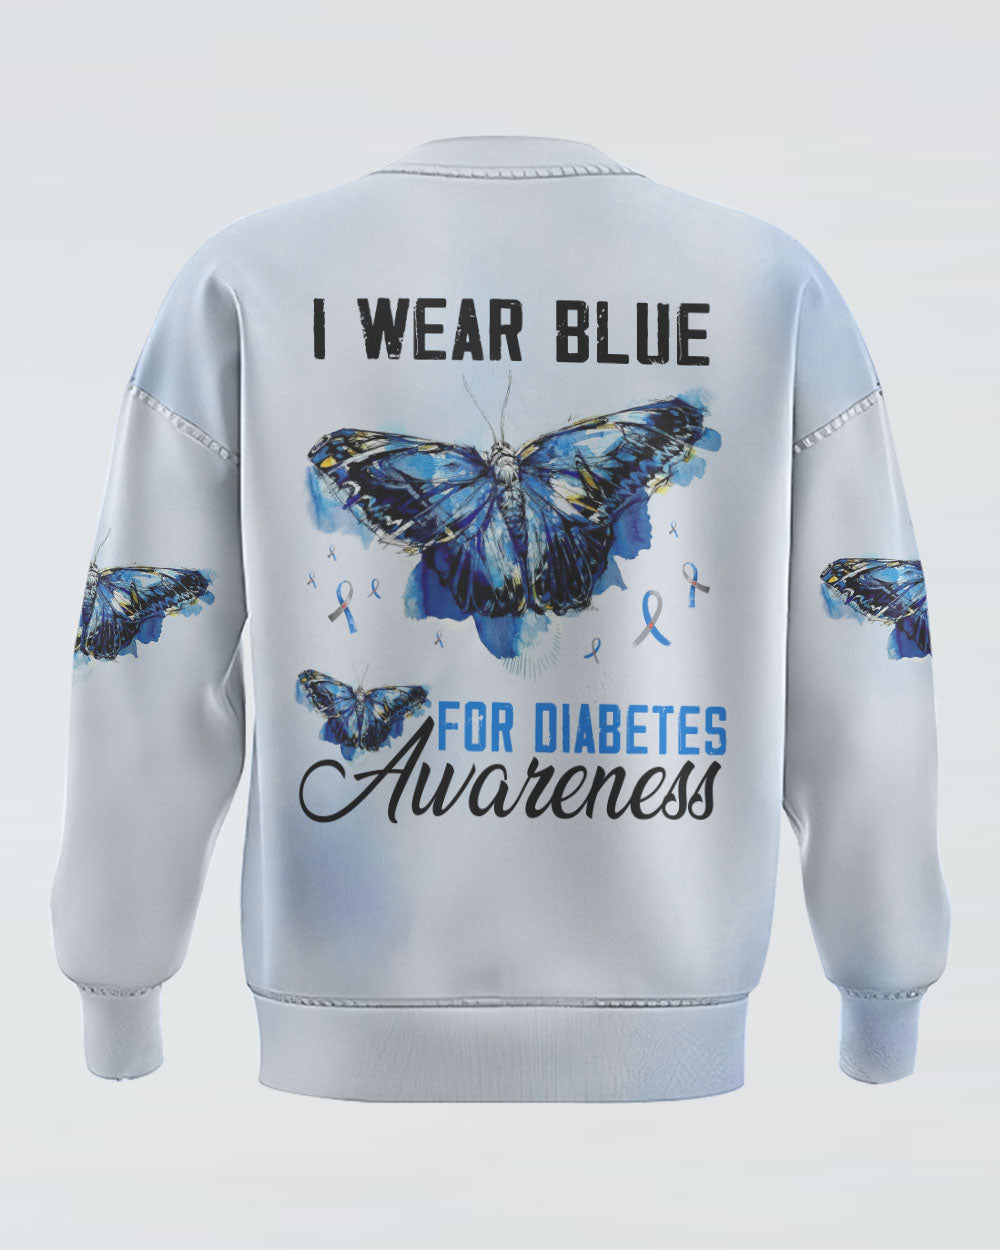 I Wear Blue For Diabetes Awareness Watercolor Butterfly Women's Diabetes Awareness Sweatshirt